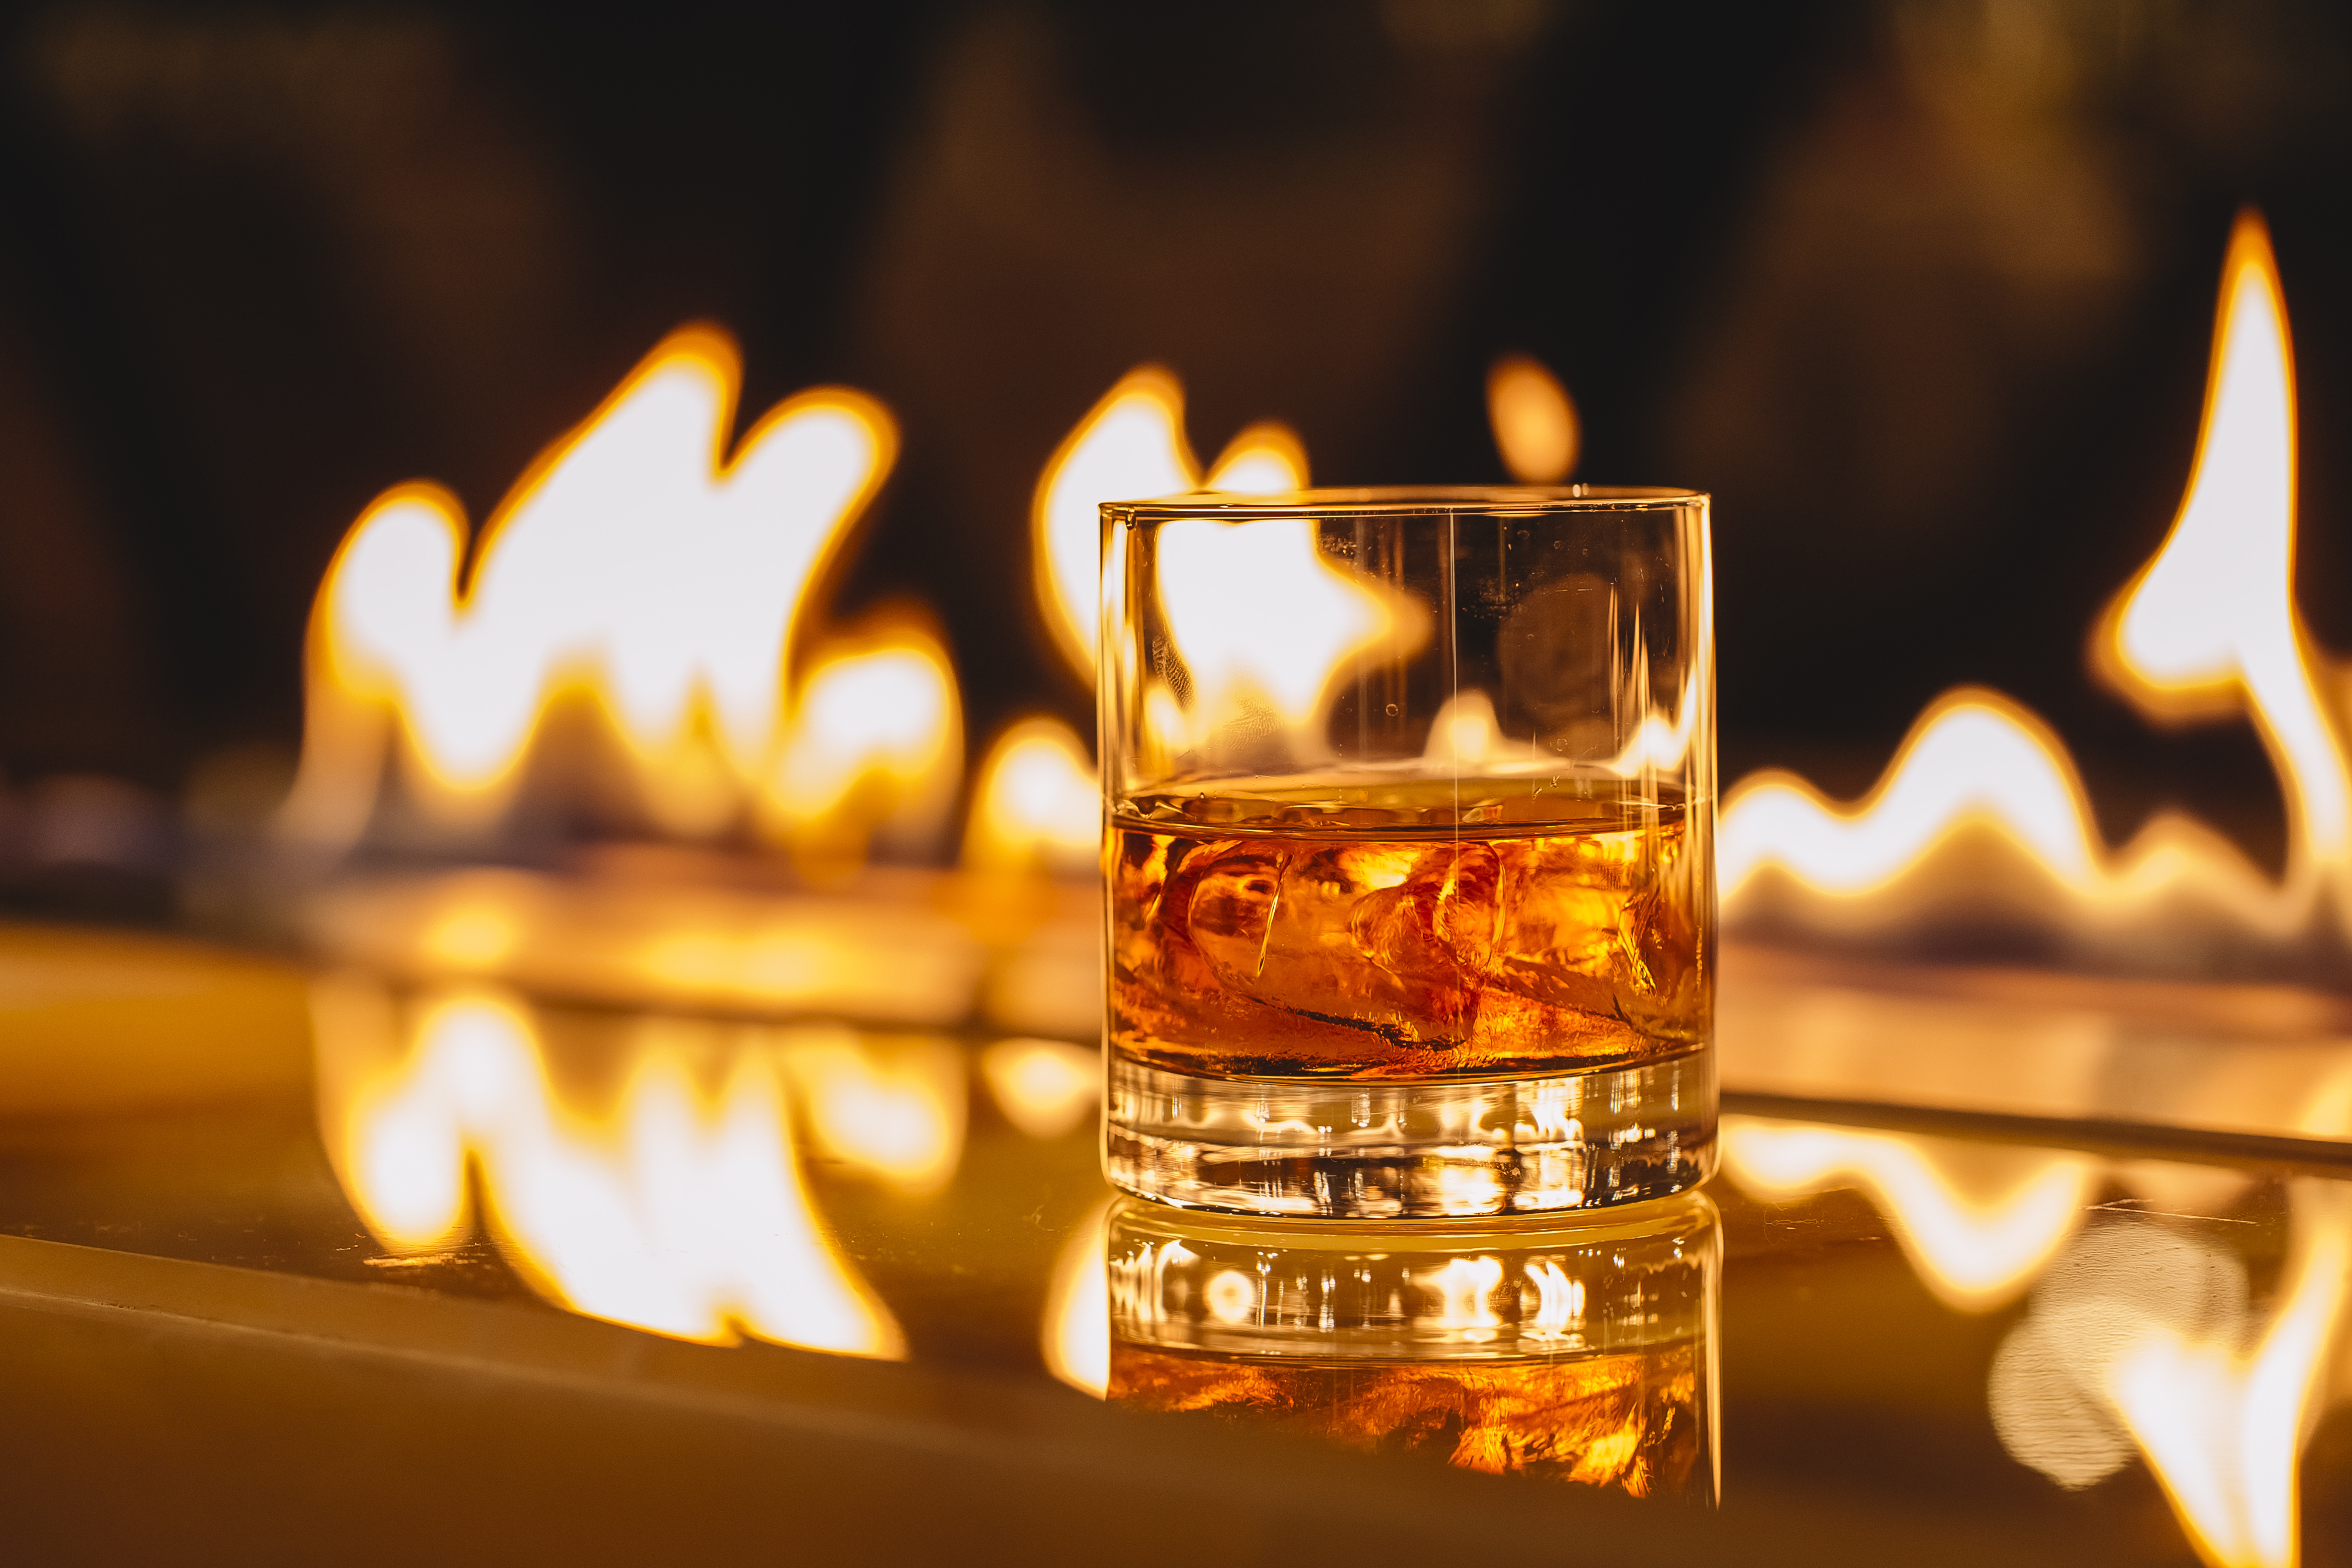 Ardmore Scotch Whisky: Tradition, Craftsmanship, and Distinctive Flavor